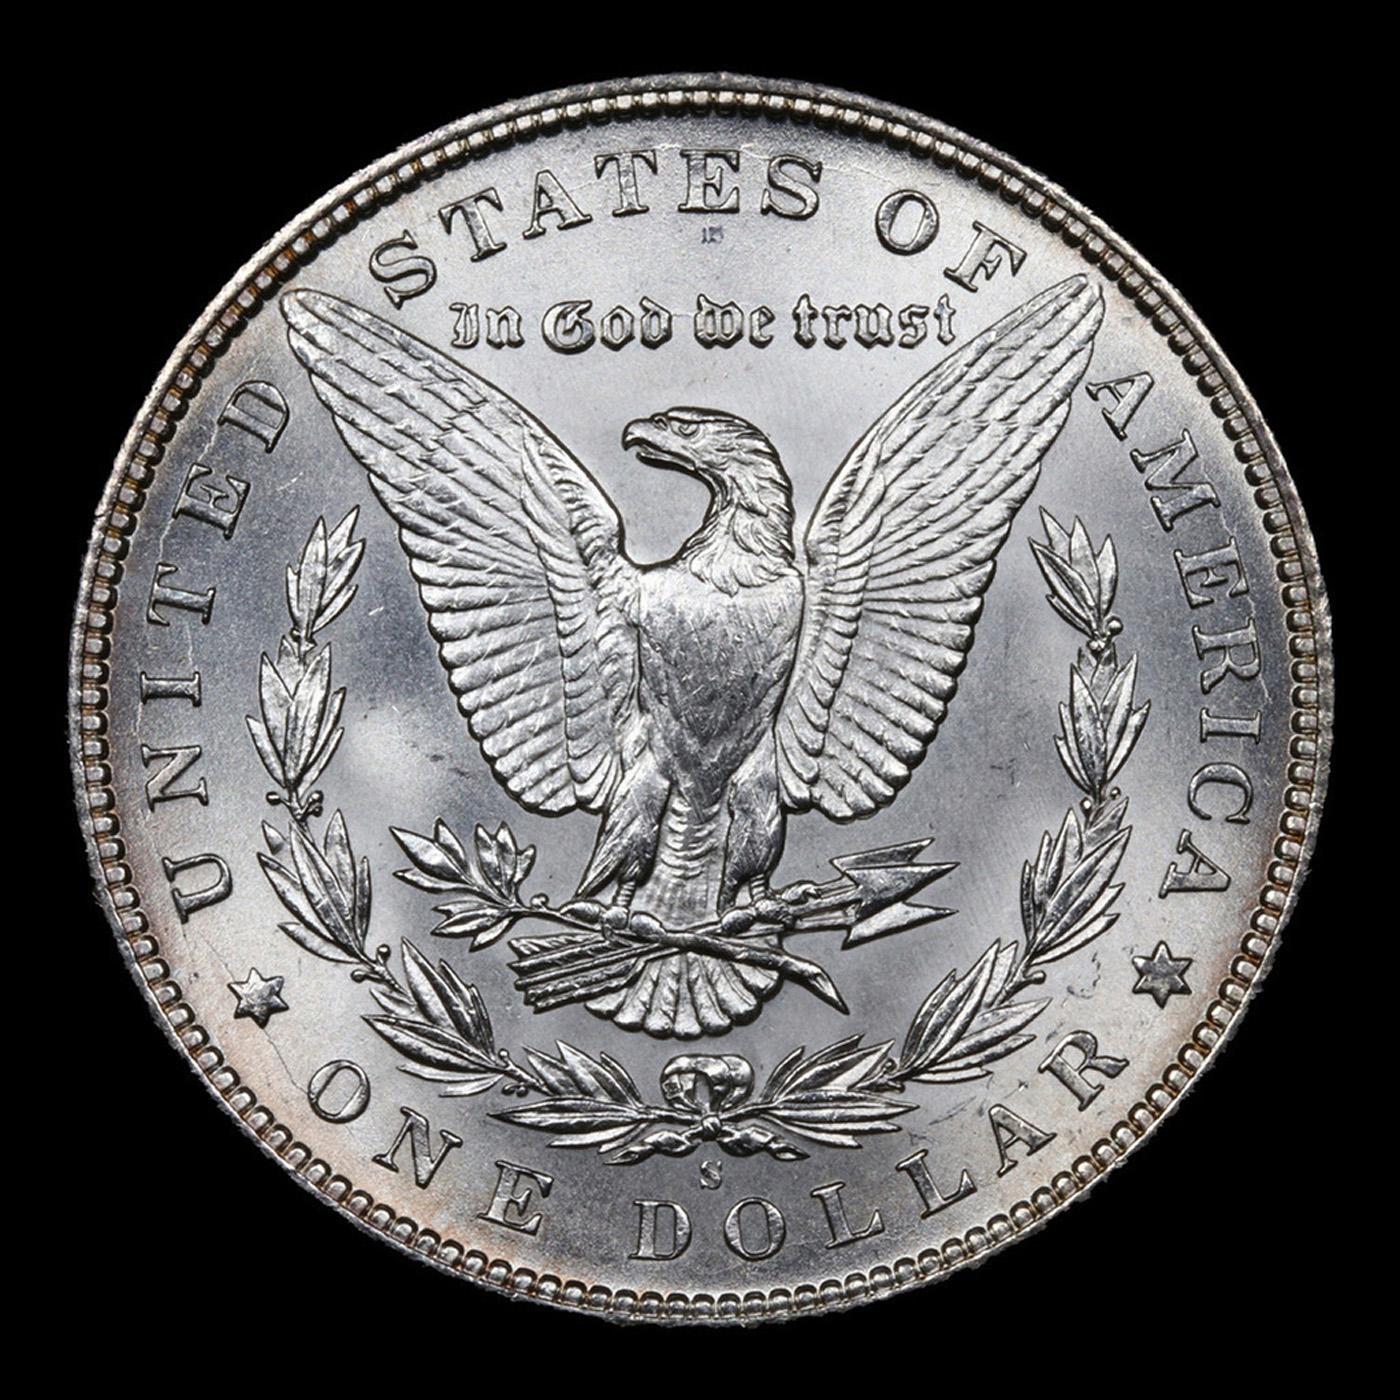 ***Auction Highlight*** 1896-s Morgan Dollar 1 Graded ms65+ By SEGS (fc)